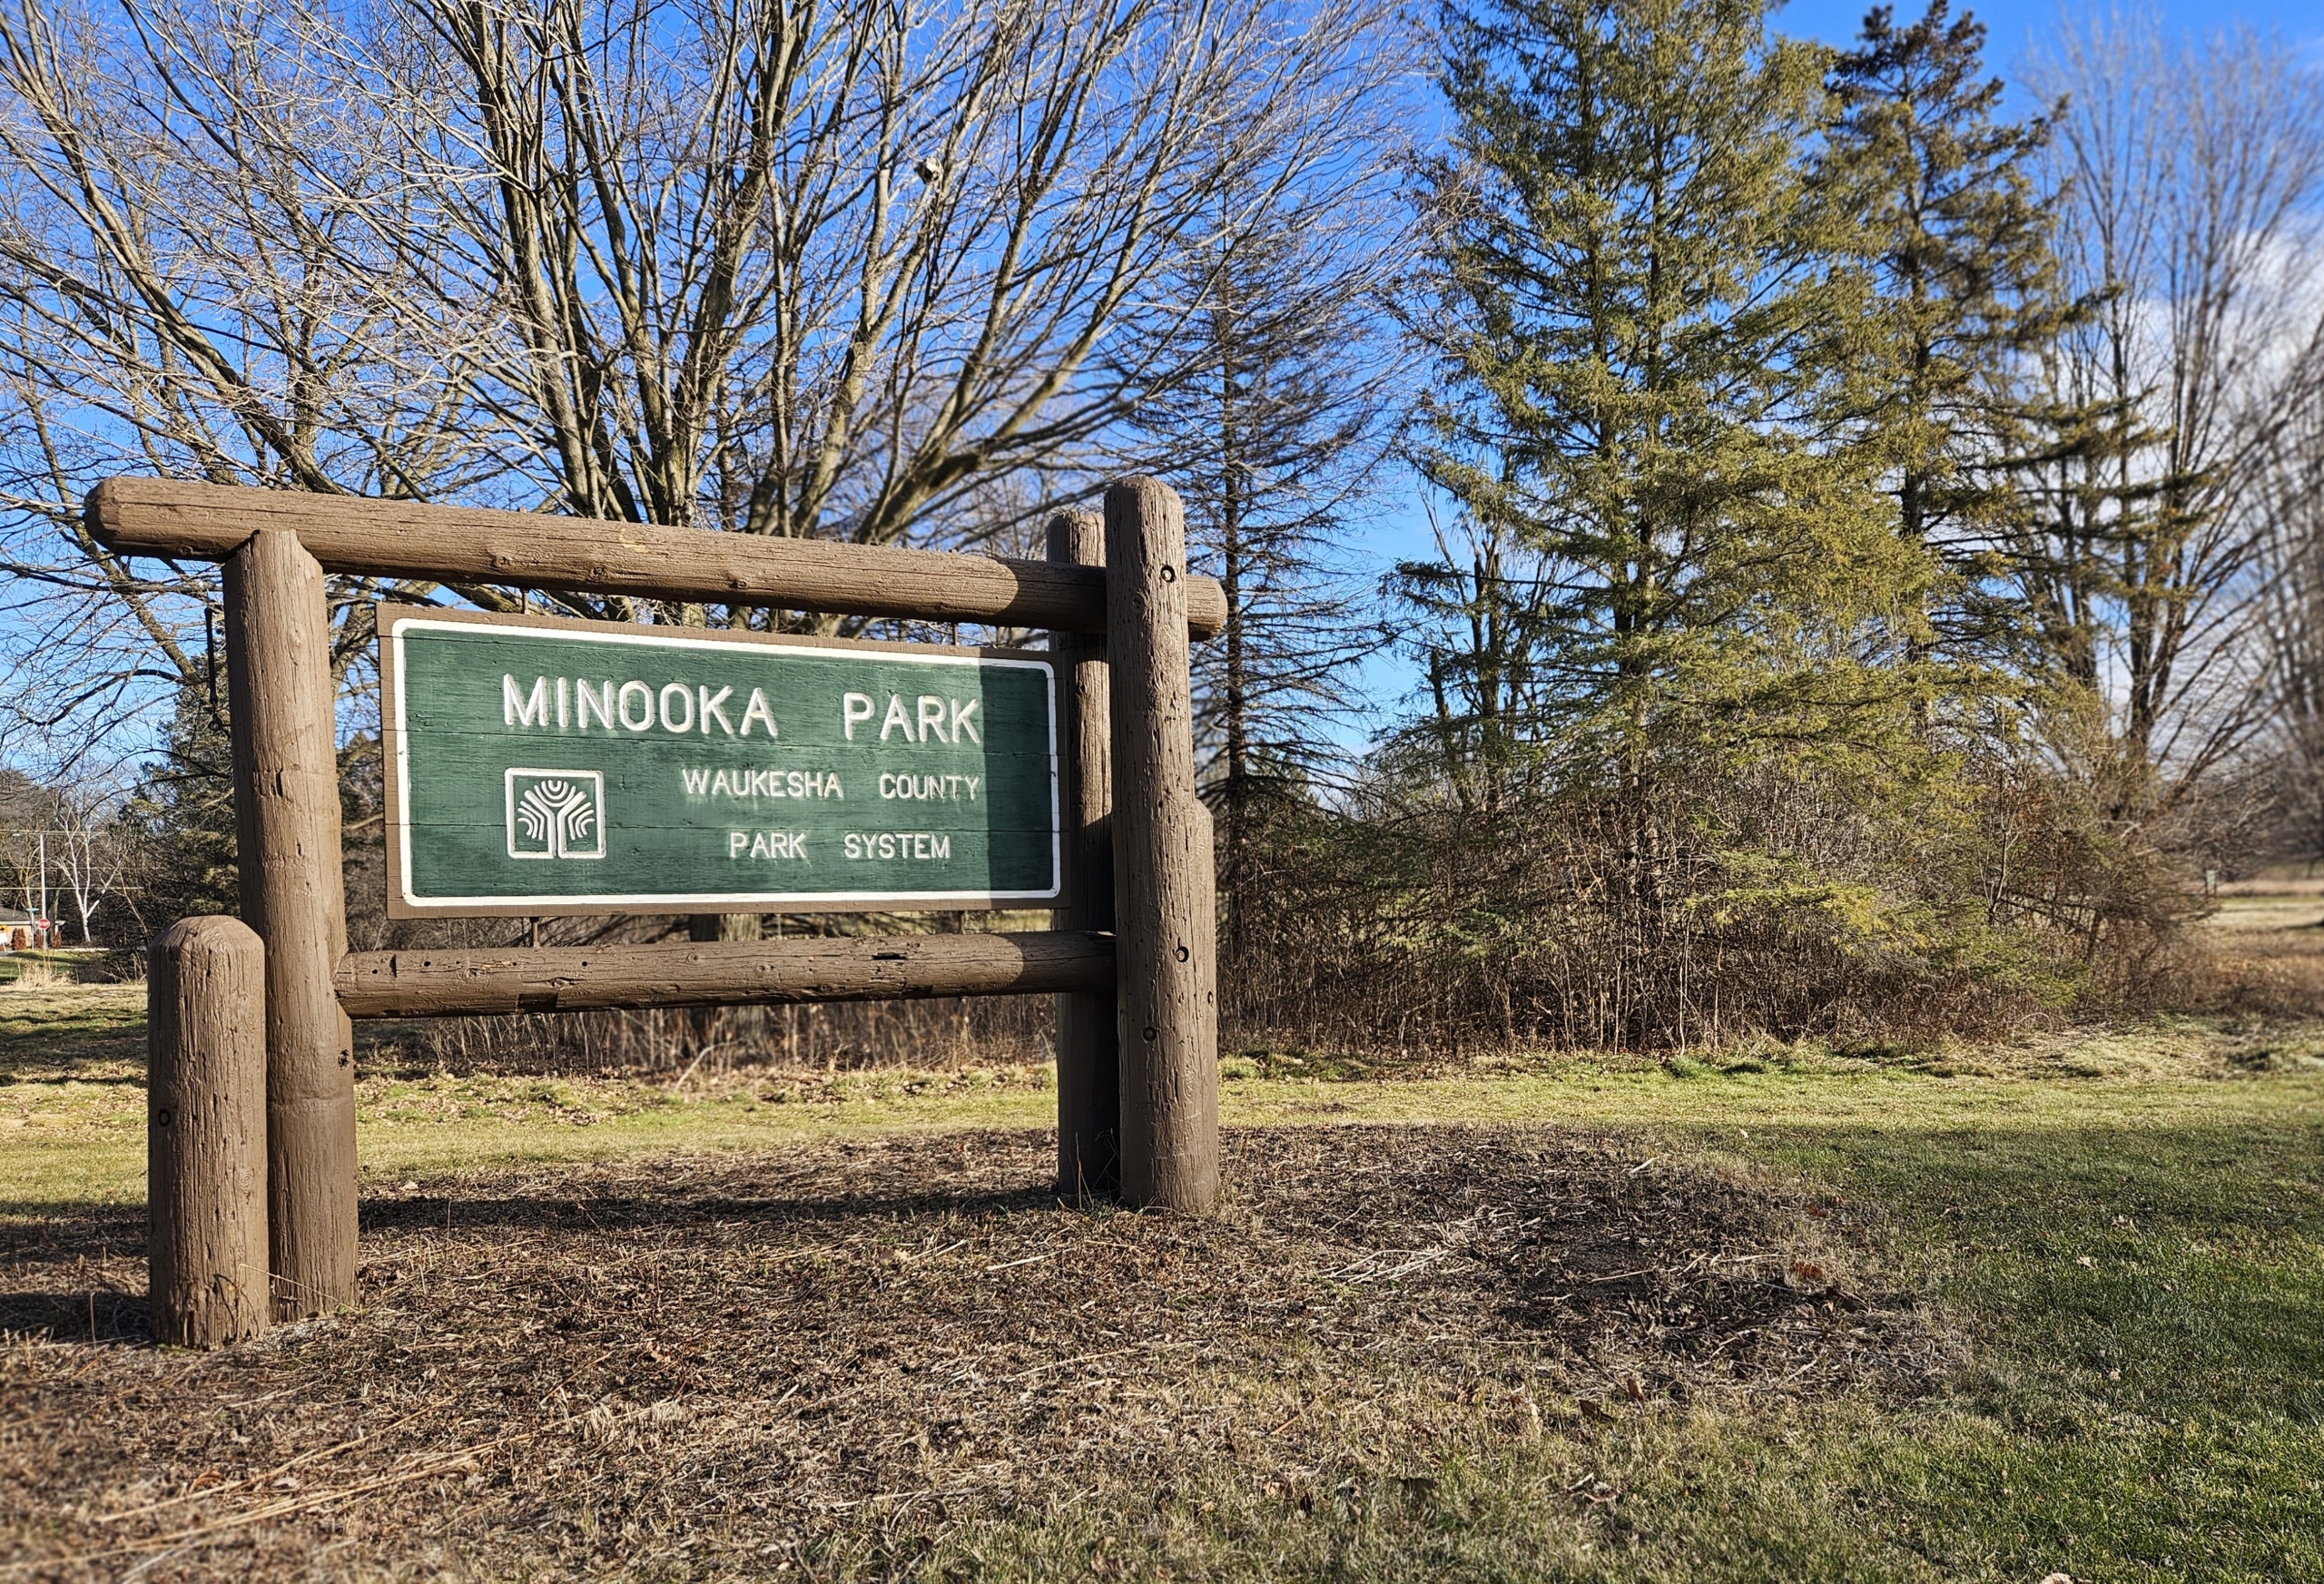 Minooka Park sign in Waukesha